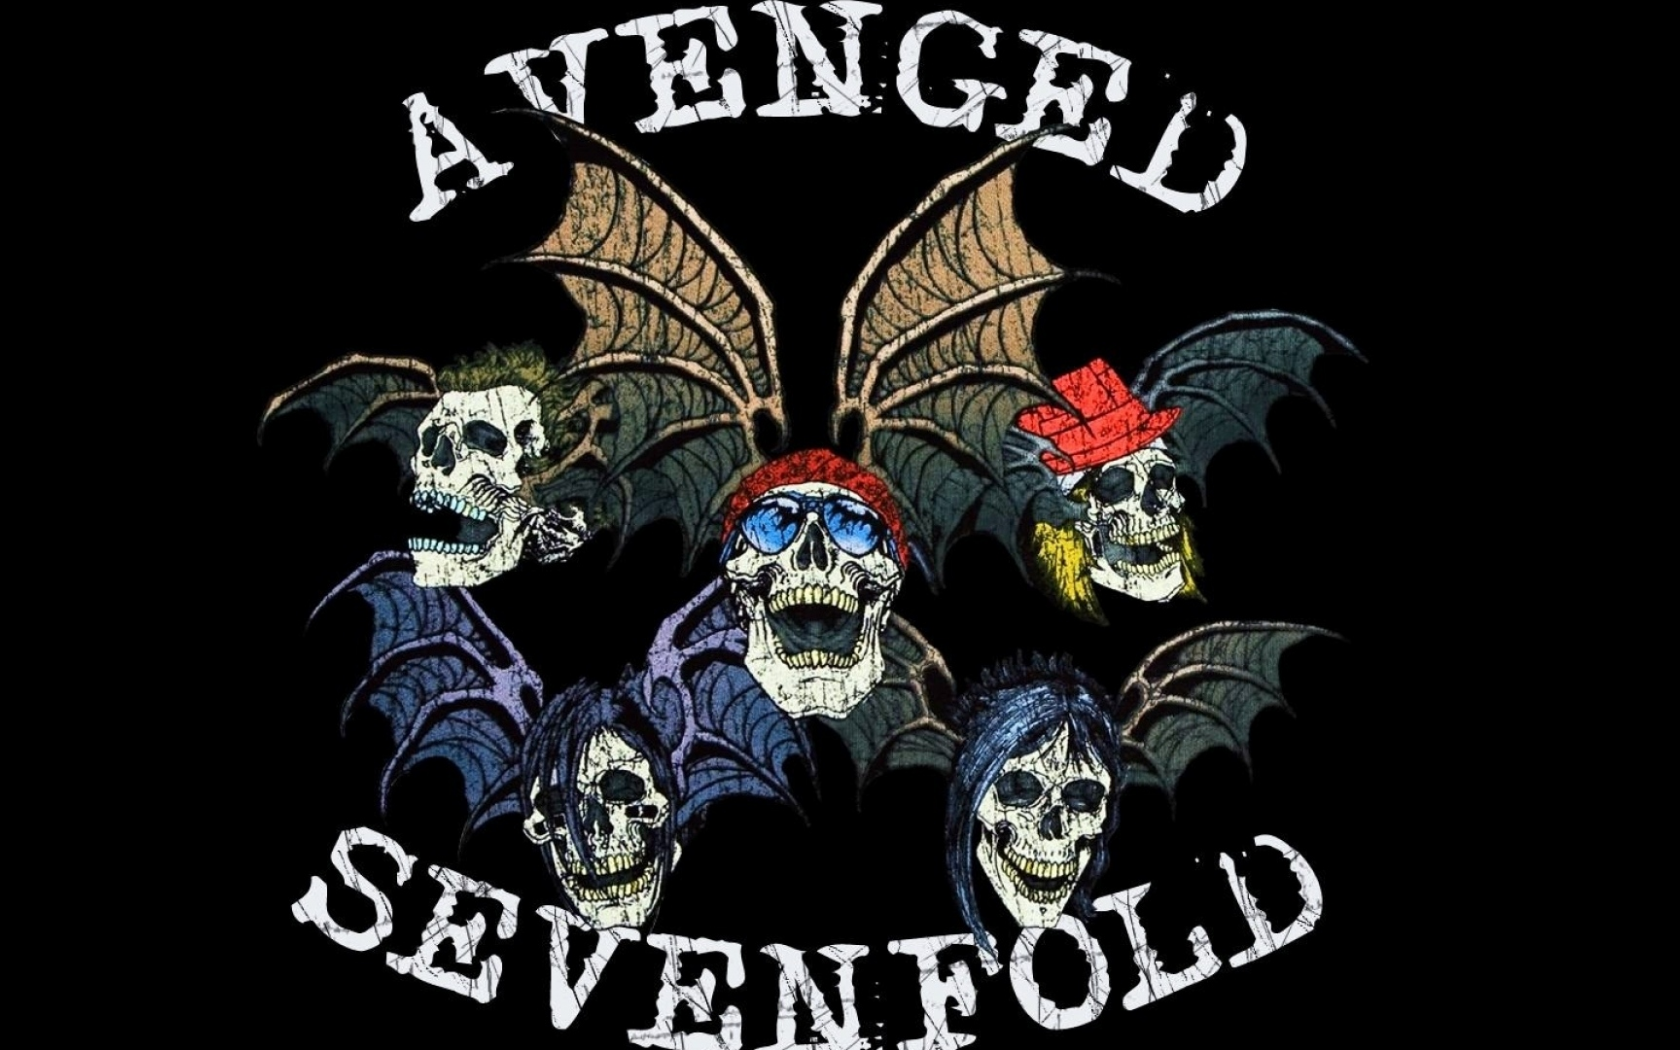 Avenged sevenfold, rock, a7x